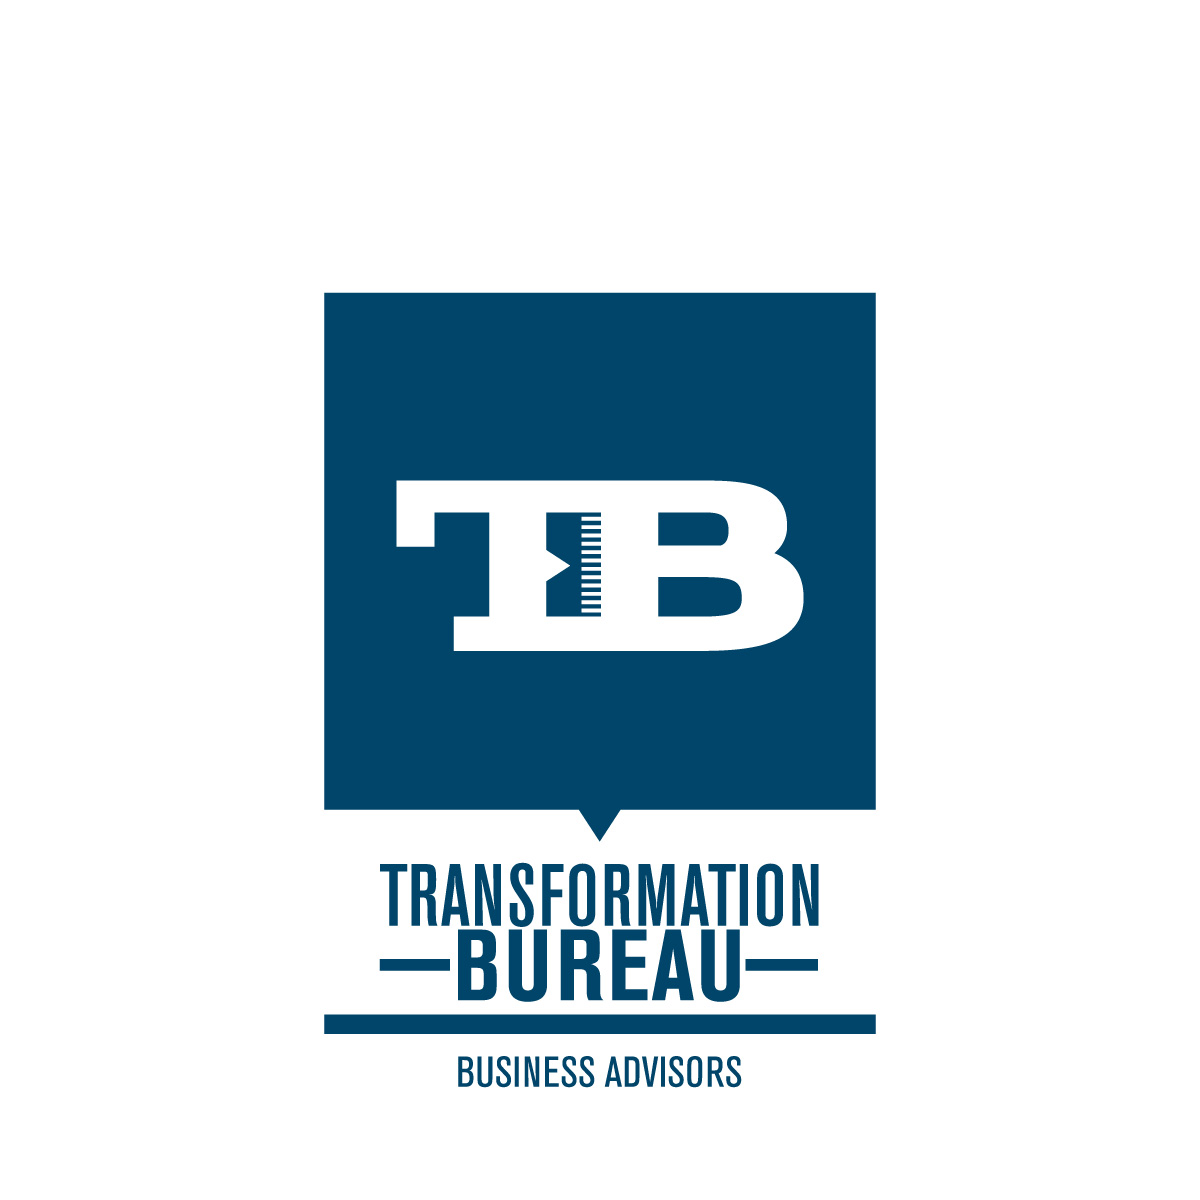 alternate transformation bureau logo